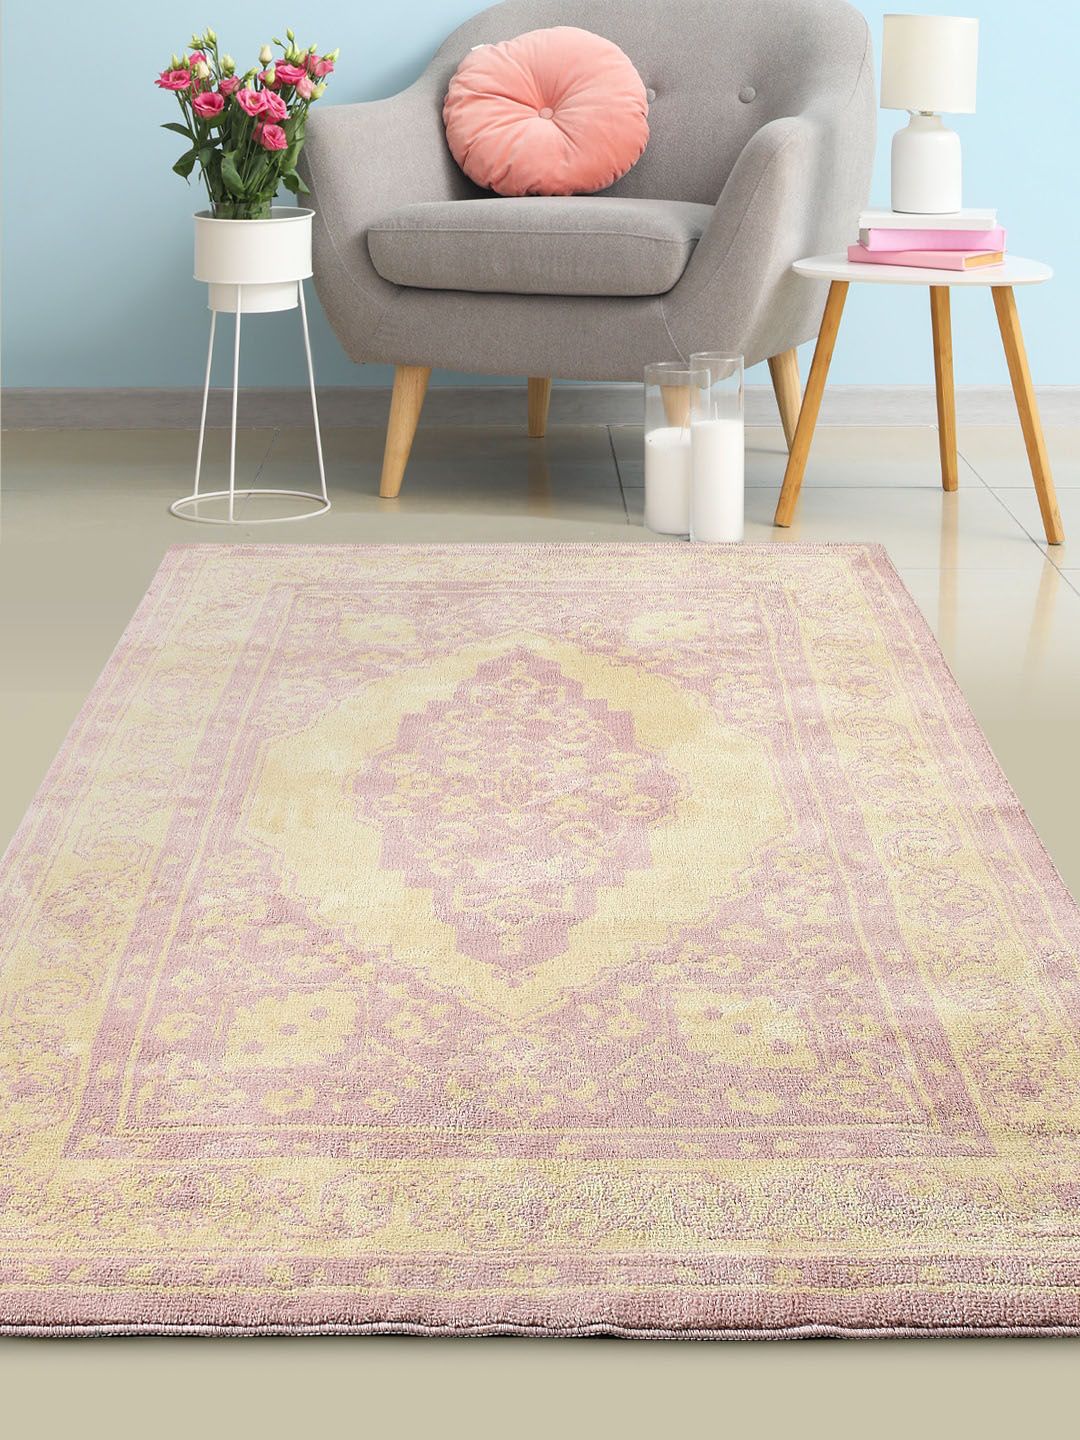 Saral Home Pink & Cream Colored Woven Design Cotton Rectangular Carpet Price in India